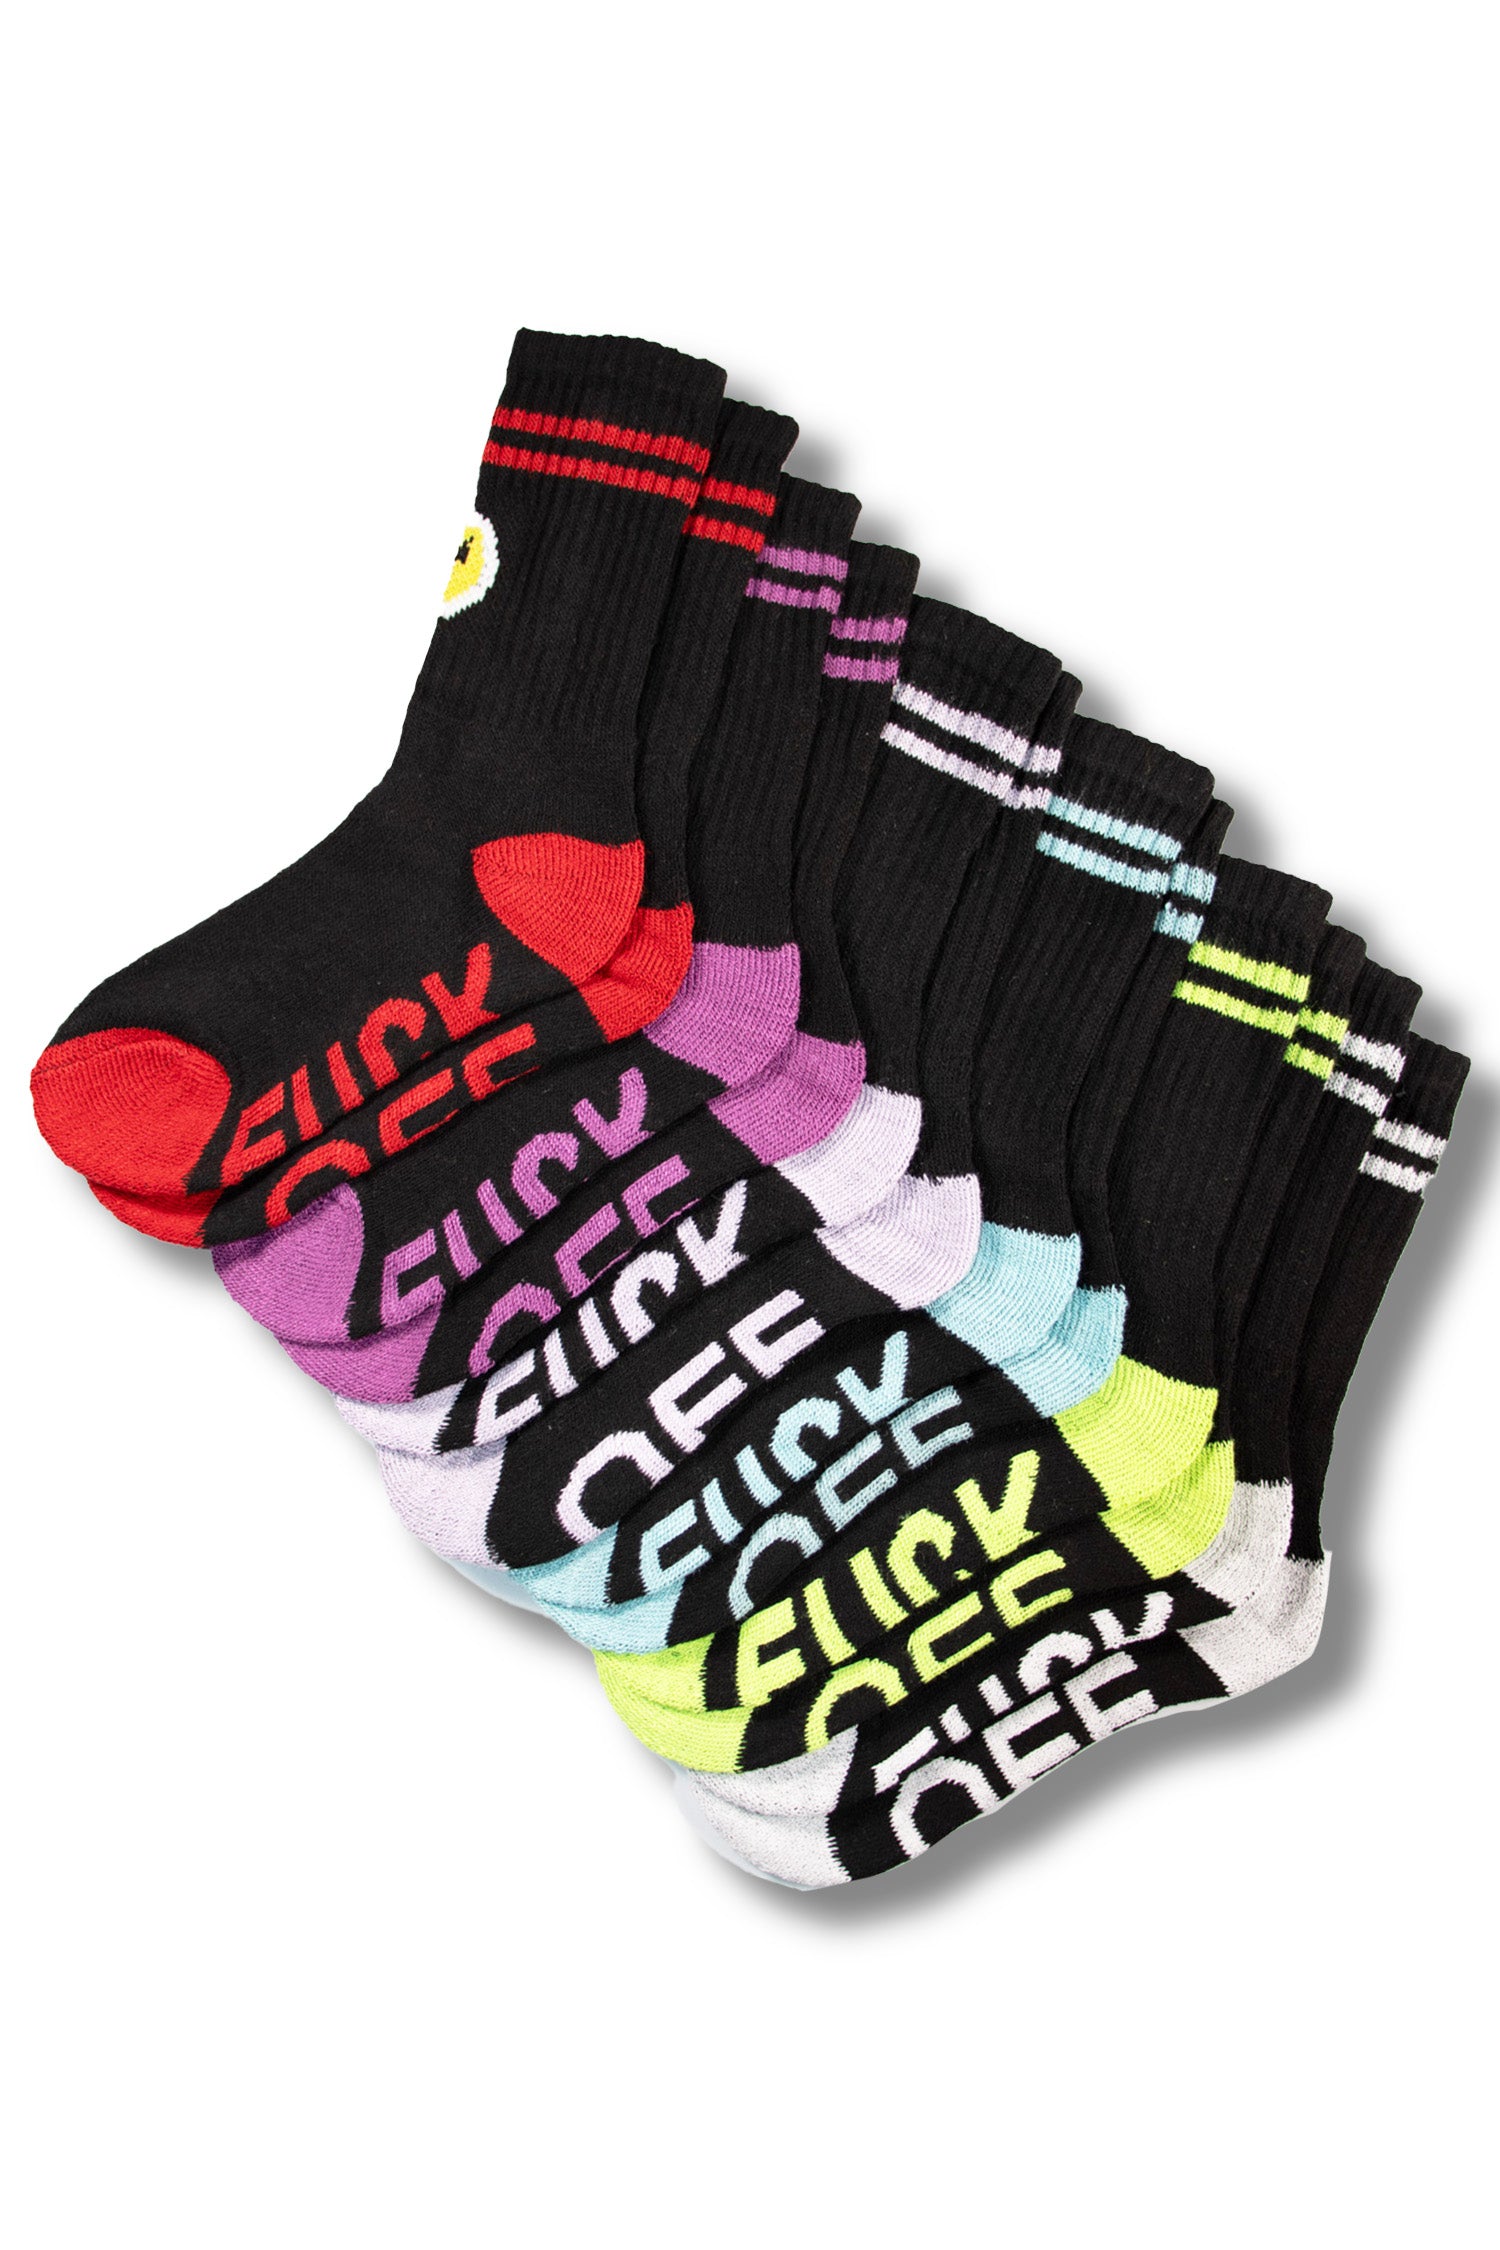 Ladies Norfolk and Way Fuck Off Novelty Rude Socks - Black (6 Pack)